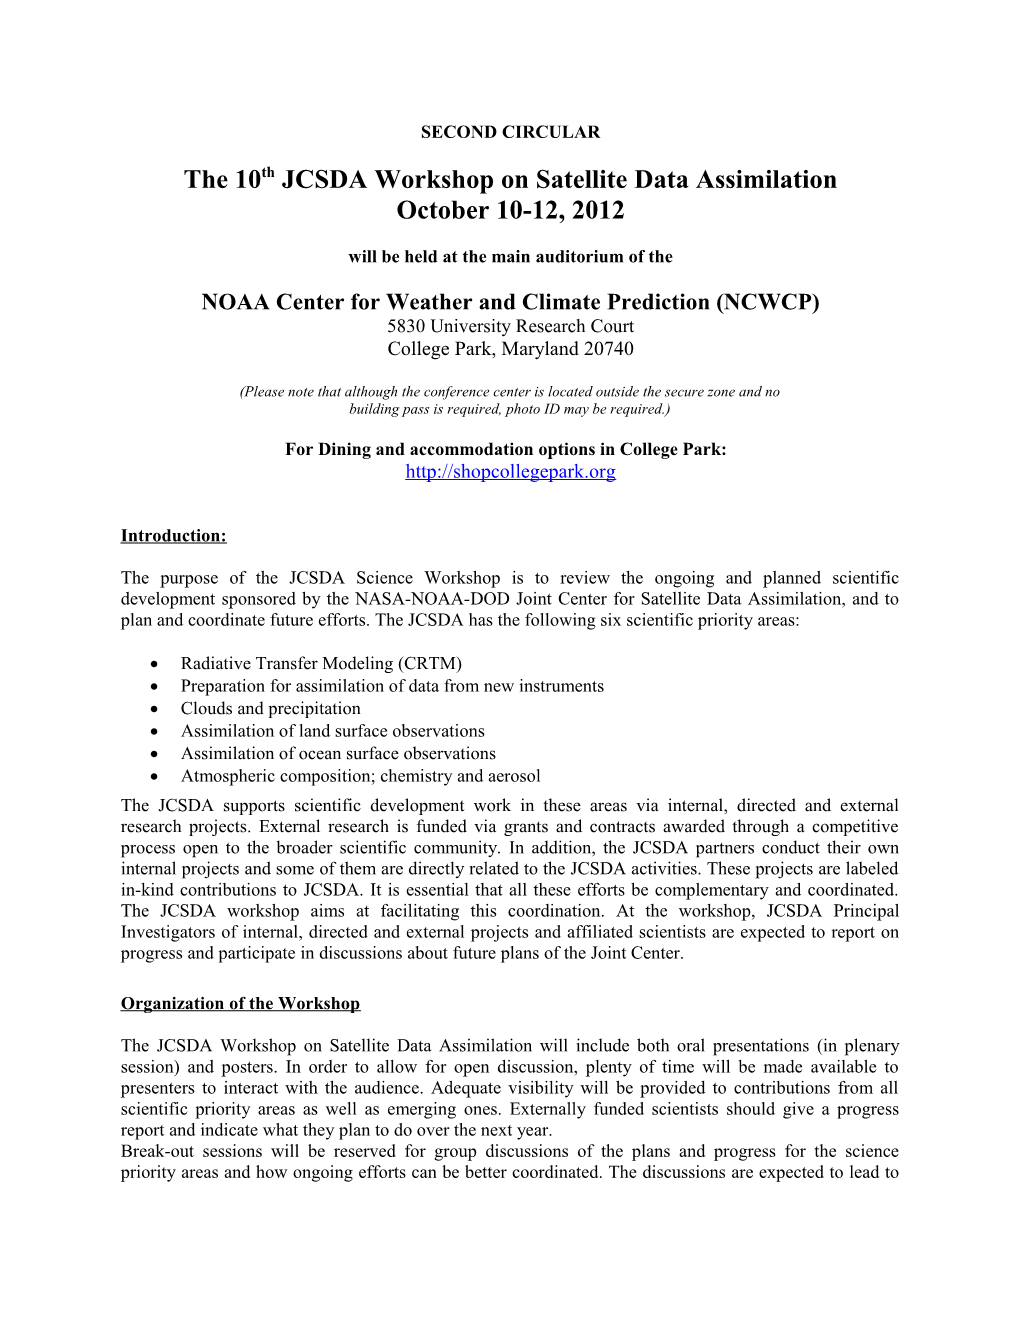 JCSDA 2Nd Workshop on Satellite Data Assimilation